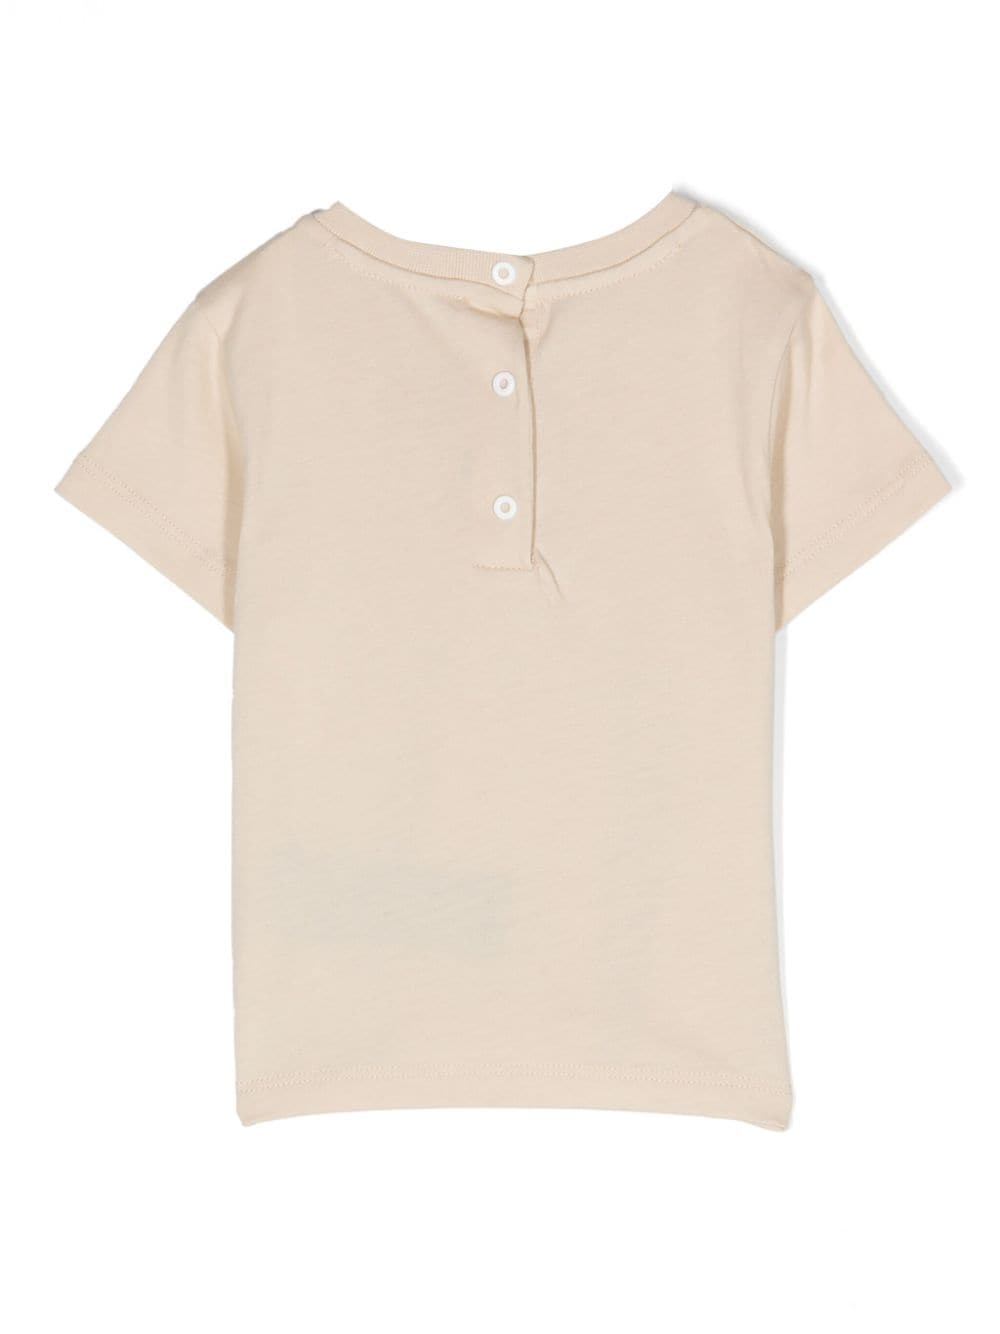 T-shirt beige neonato